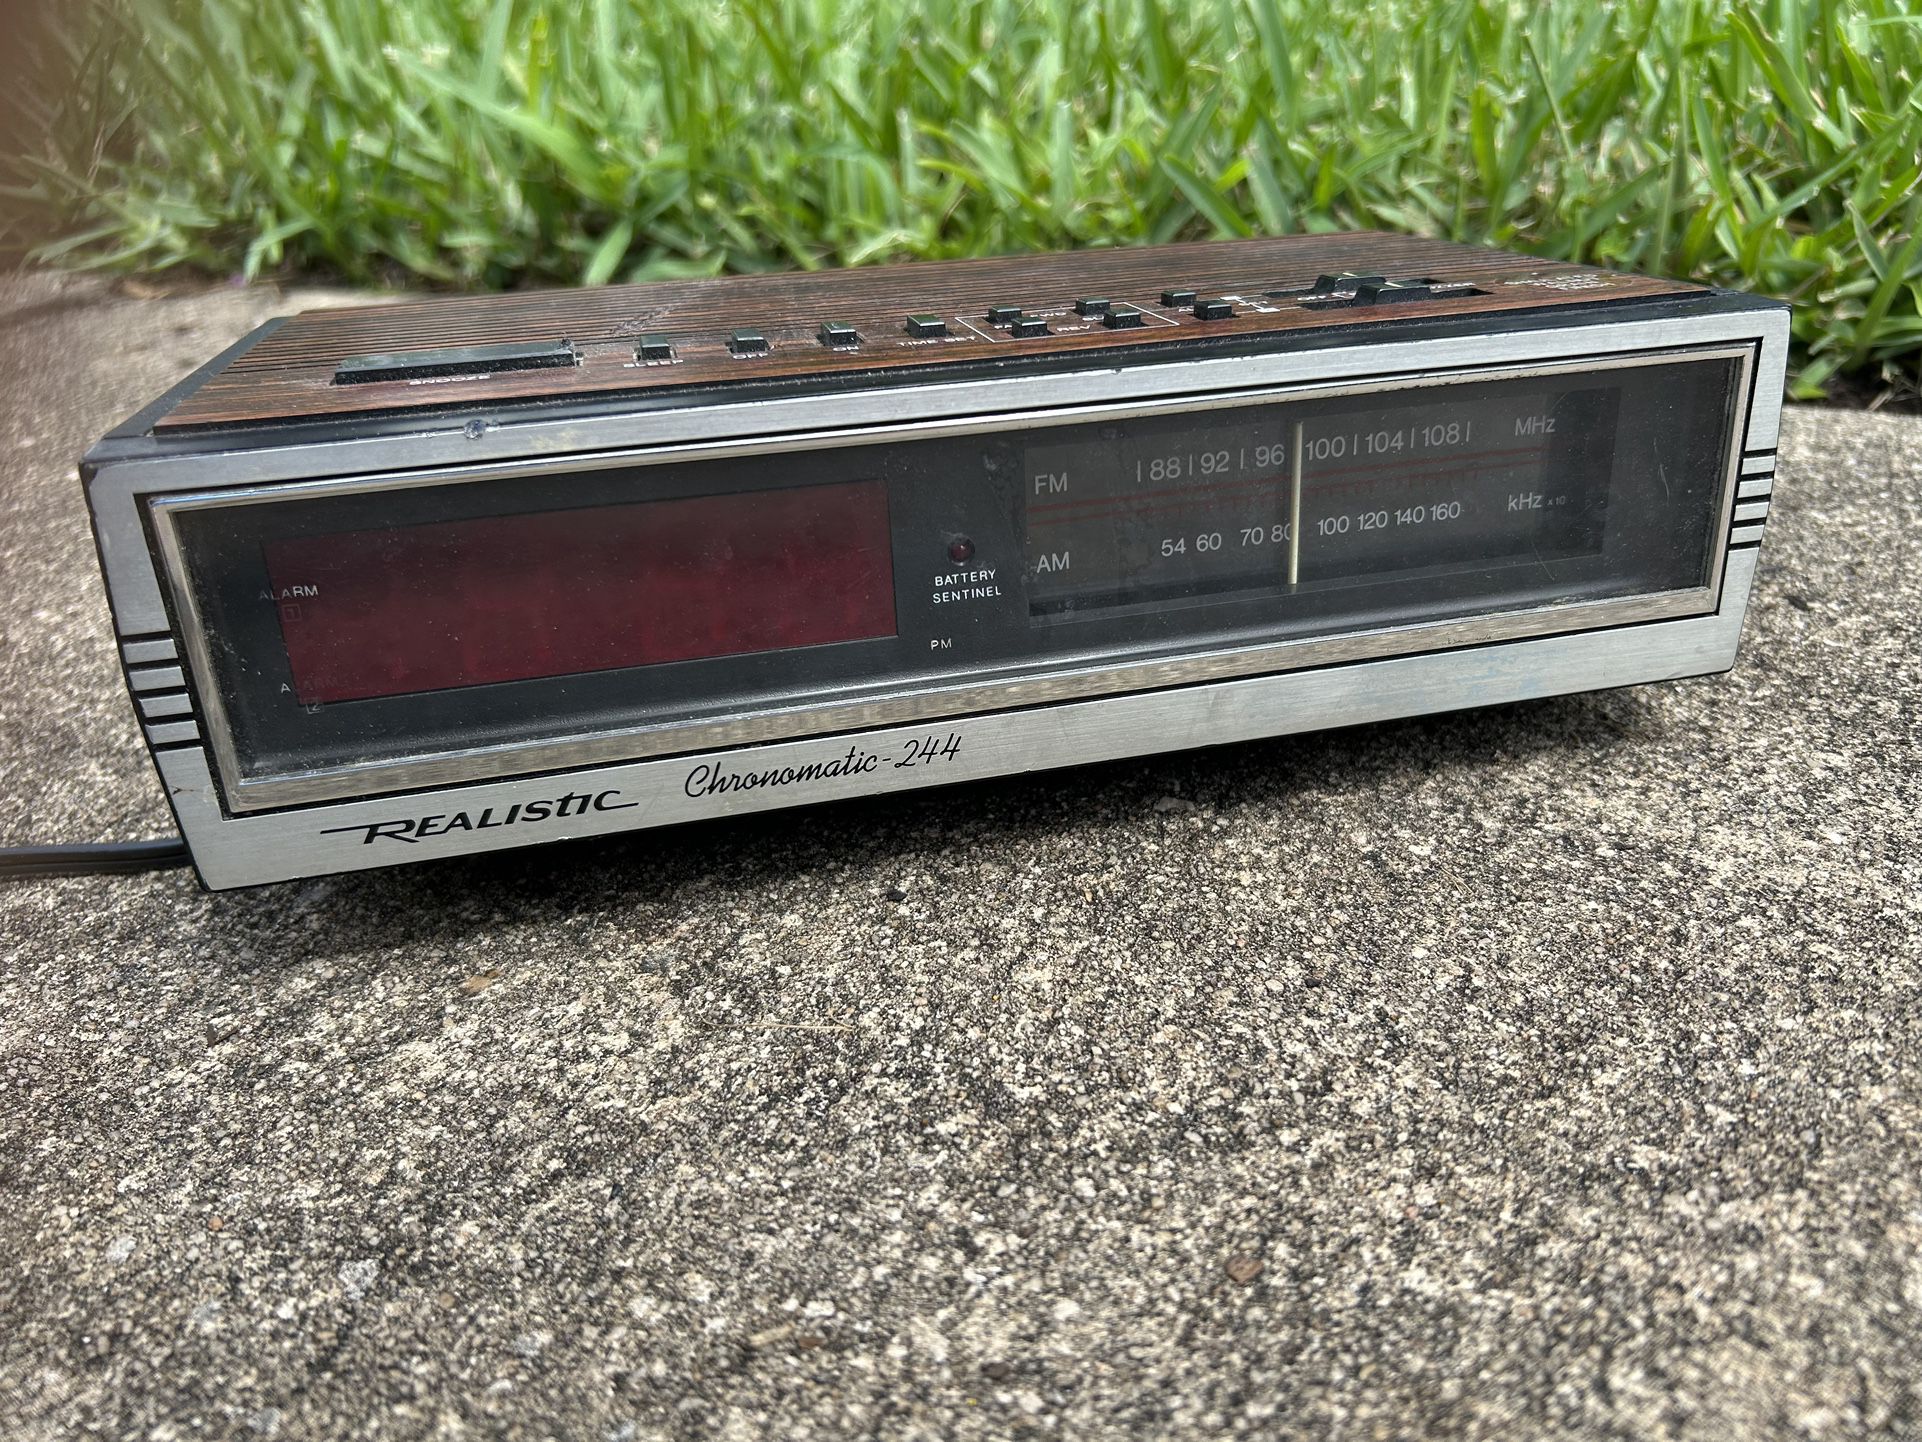 Vintage Wood Grain Realistic Chronomatic 244 AM/FM Radio Digital Alarm Clock